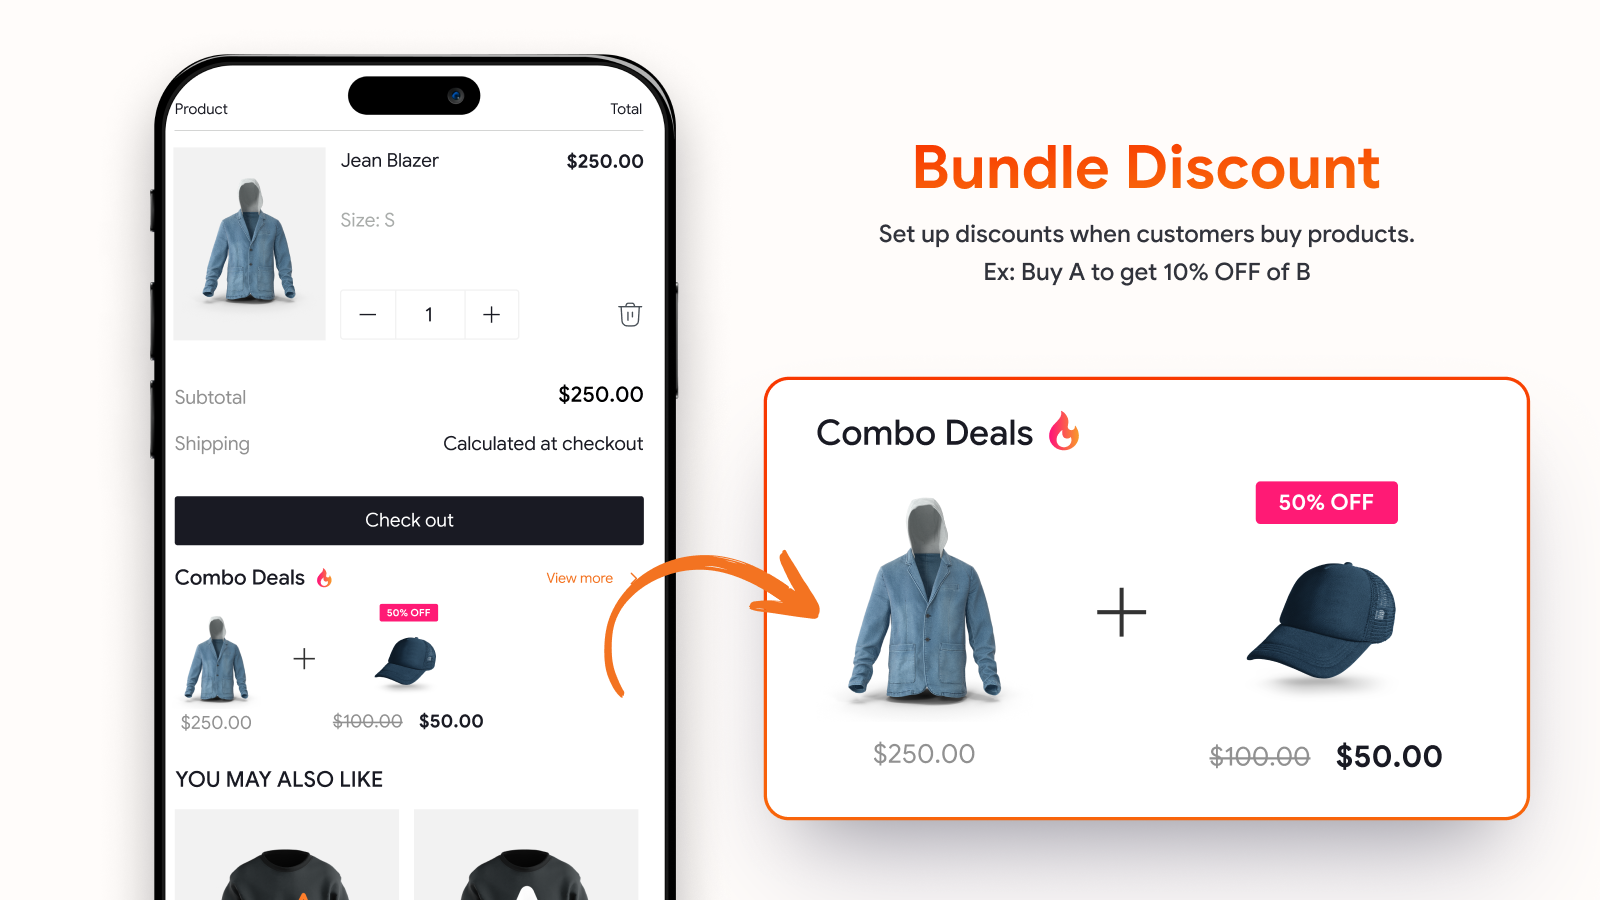 discount, discount code, volume bulk discount, bundle discount